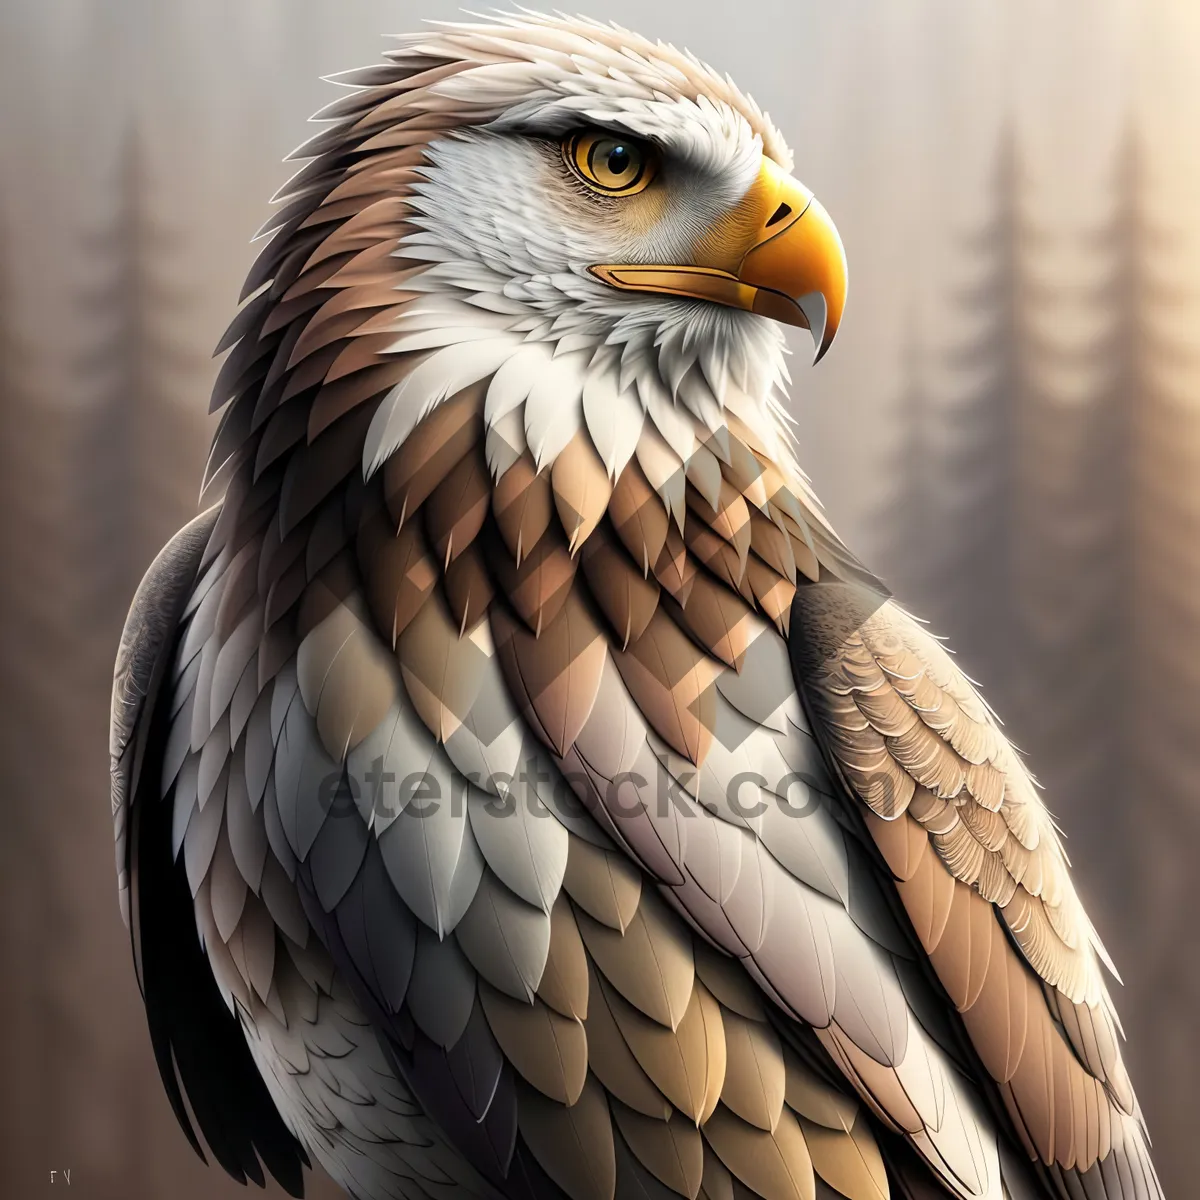 Picture of Predatory Majesty: Intense Gaze of a Falcon